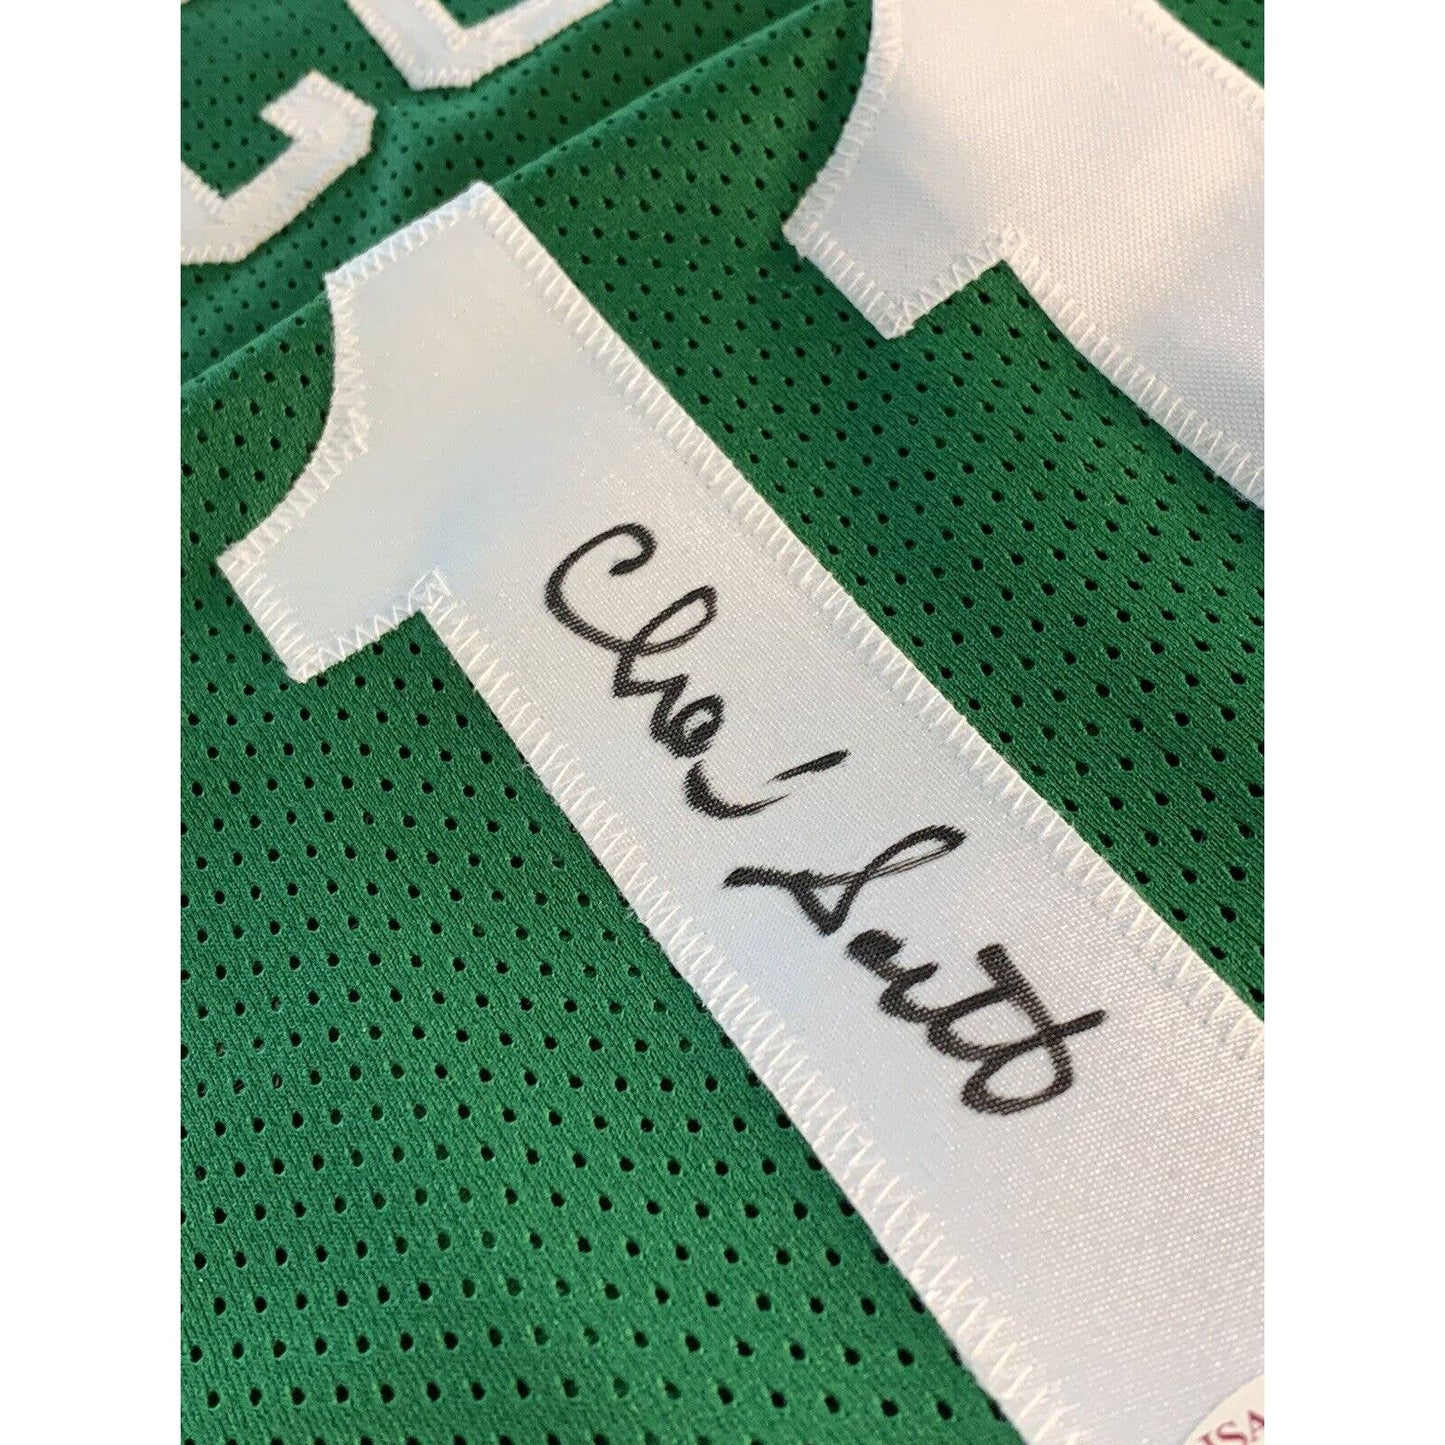 Charlie Scott Autographed/Signed Jersey JSA Sticker Boston Celtics - TreasuresEvolved